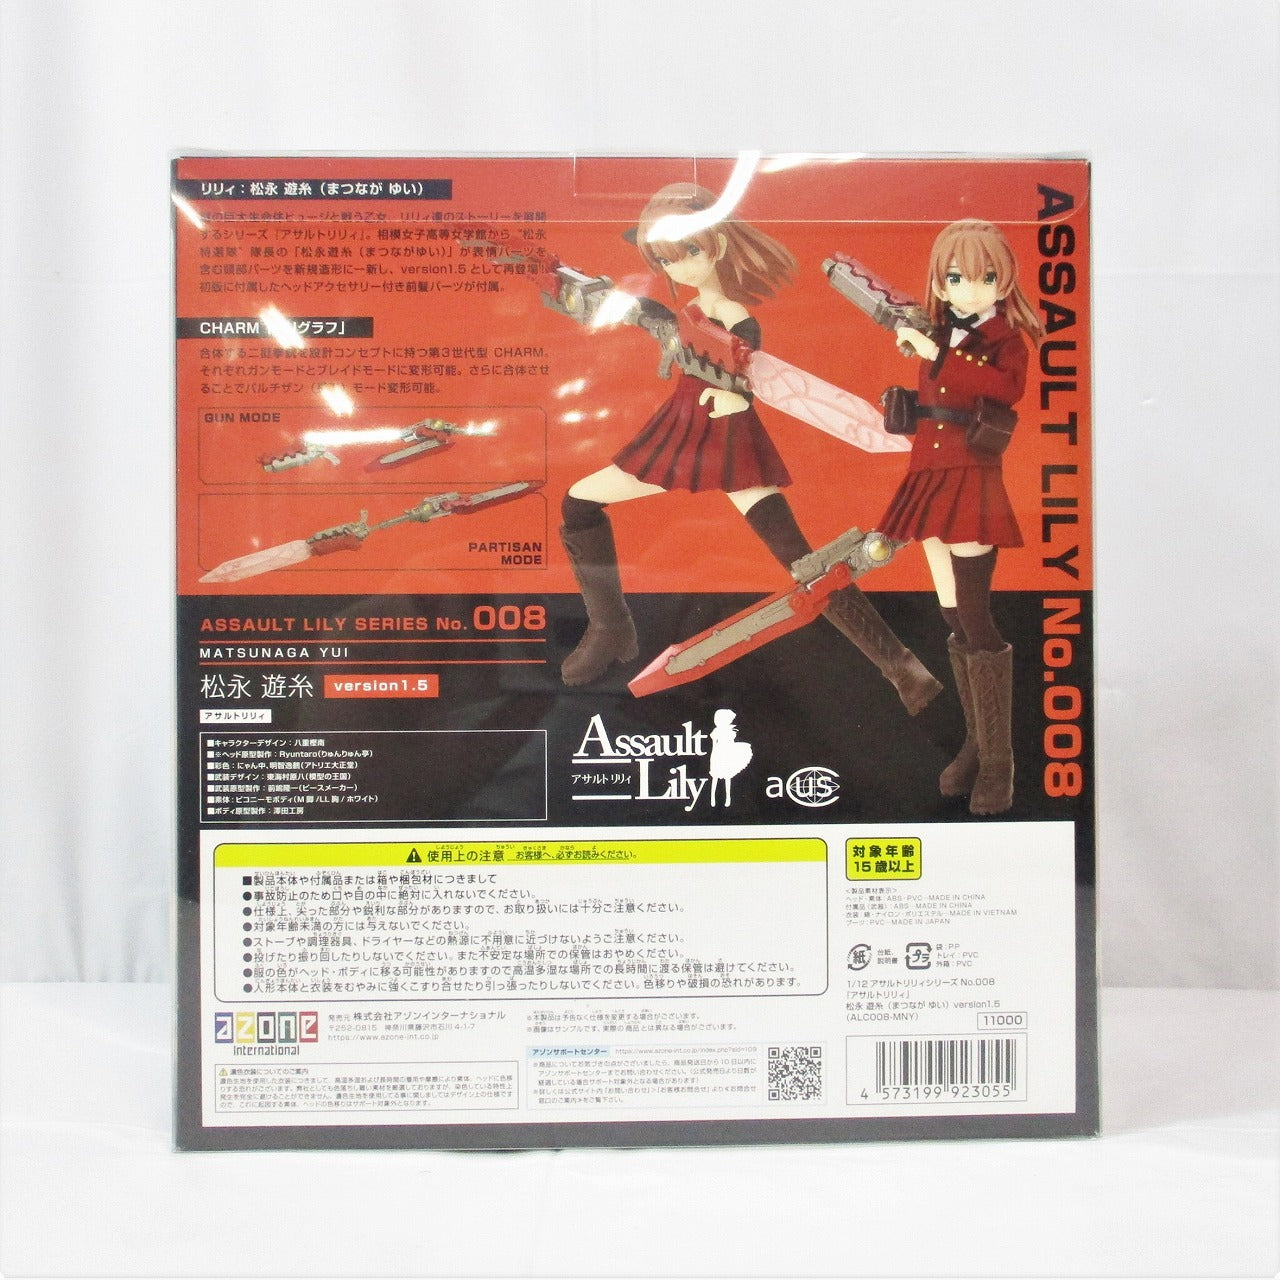 Assault Lily Series 008 "Assault Lily" Yui Matsunaga version1.5 1/12 Complete Doll